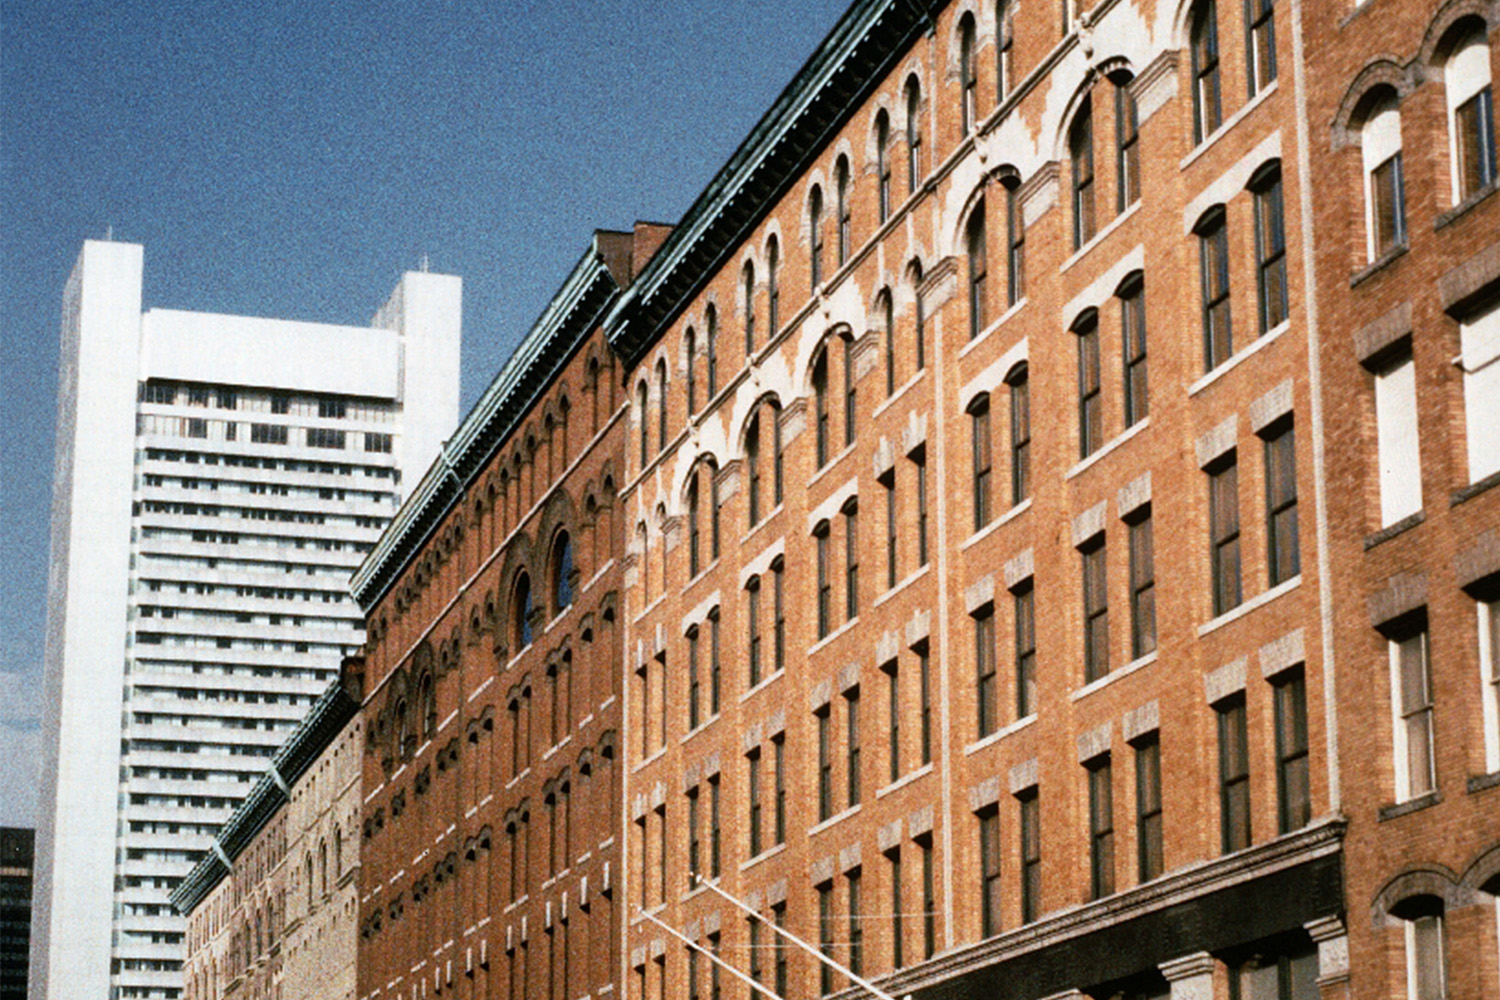 Façade of 280 Summer Street building, seen at an angle